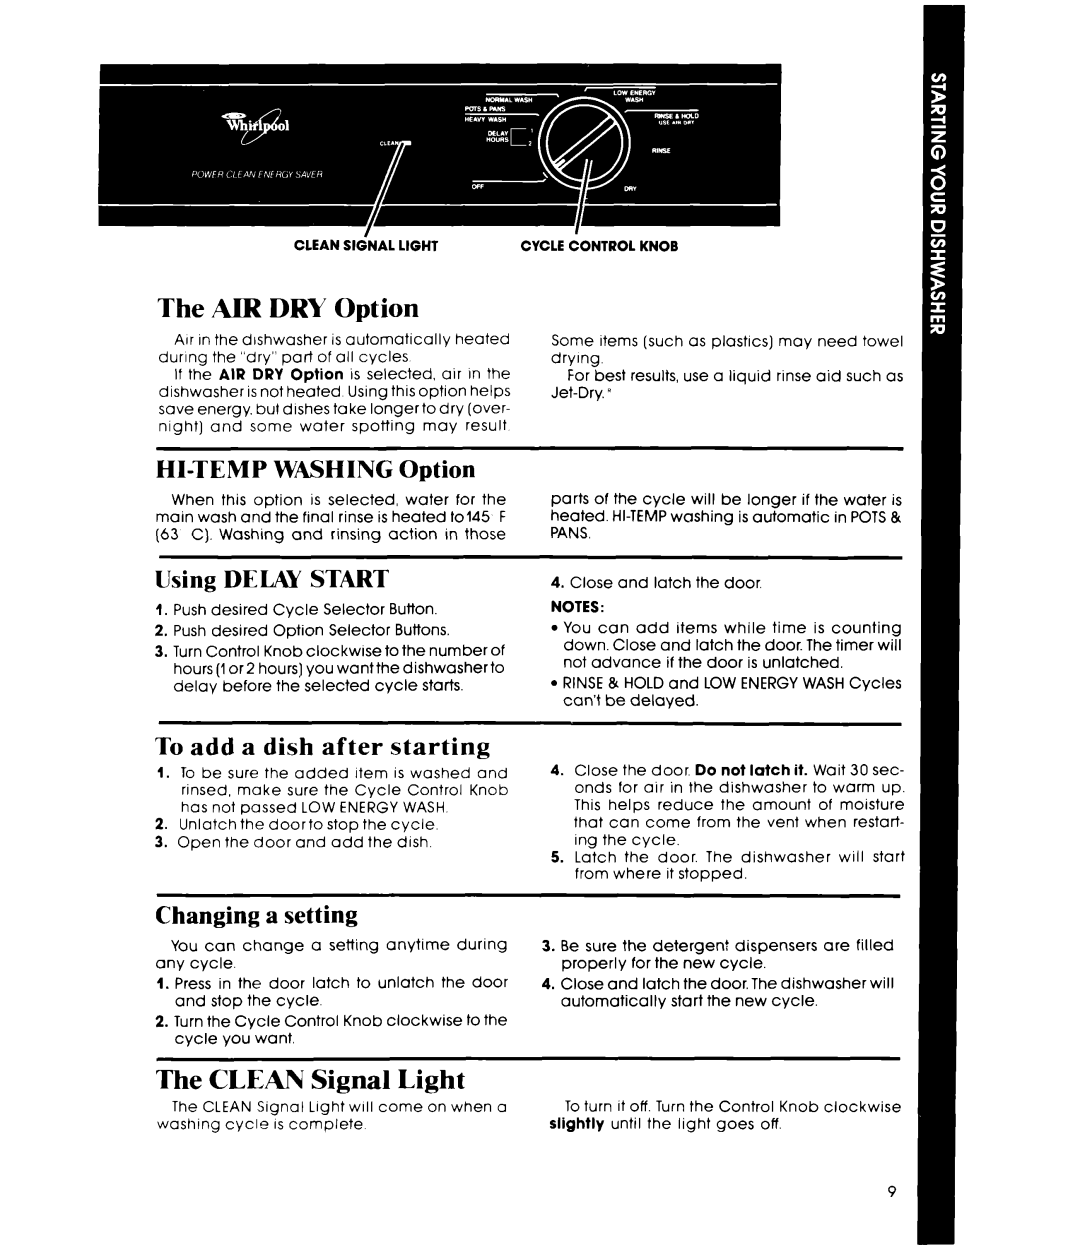 Whirlpool DU7600XS manual The AIR DRY Option, The CLEAN Signal Light, HI-TEMPWASHING Option, Using DELAY START 